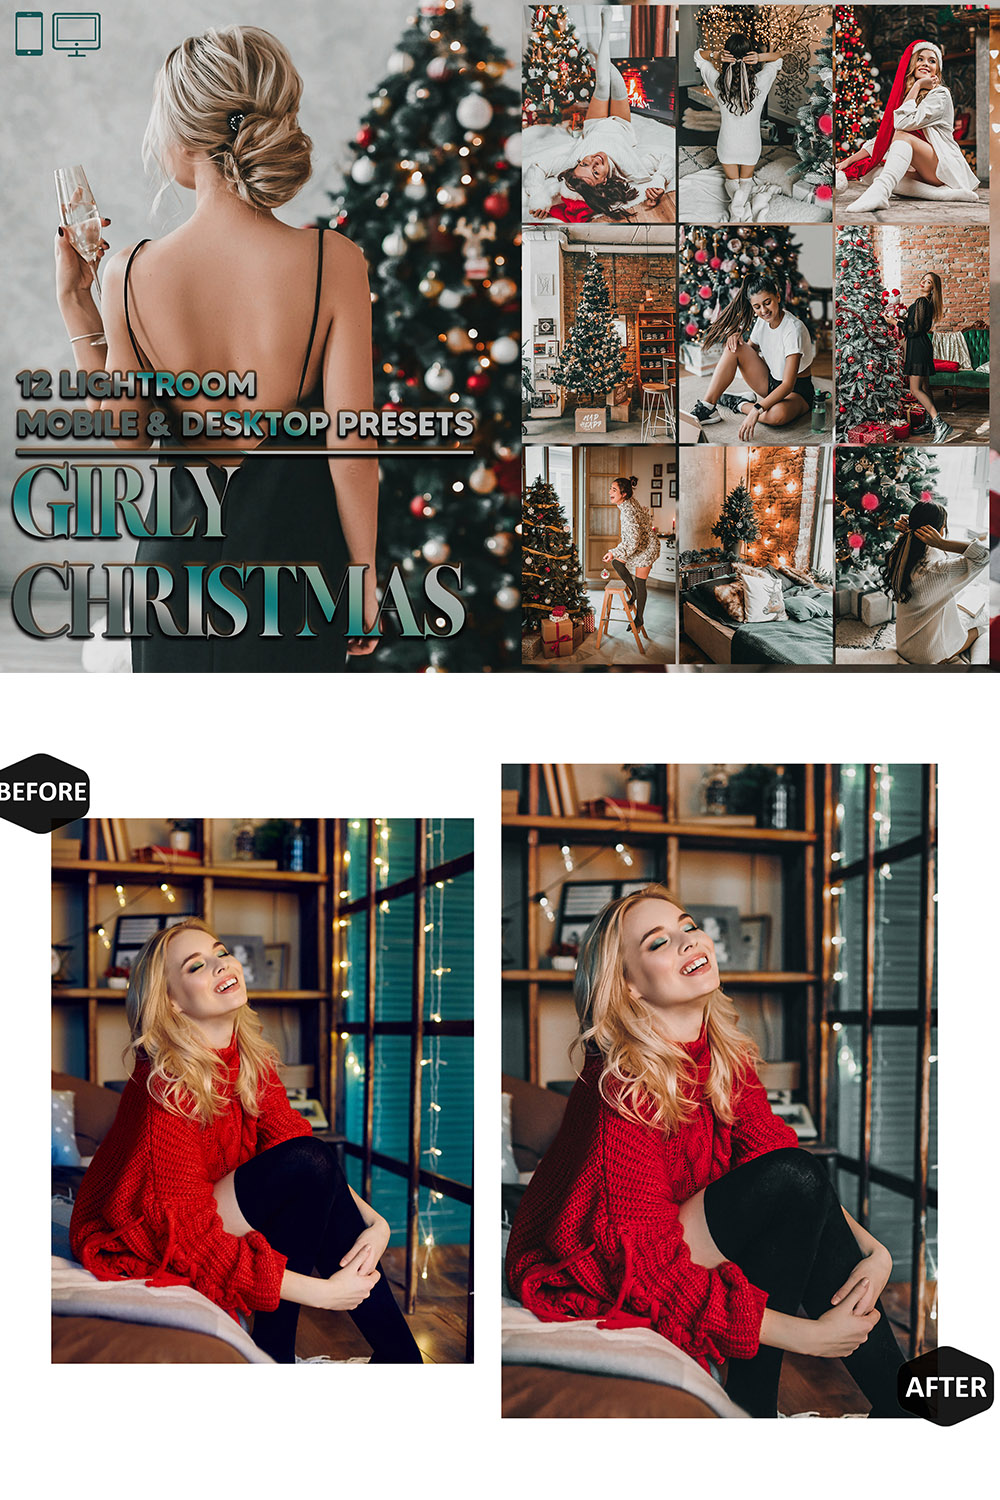 12 Girly Christmas Lightroom Presets, Holiday Mobile Preset, December Xmas Desktop LR Filter Scheme Lifestyle Theme For Portrait, Instagram pinterest preview image.